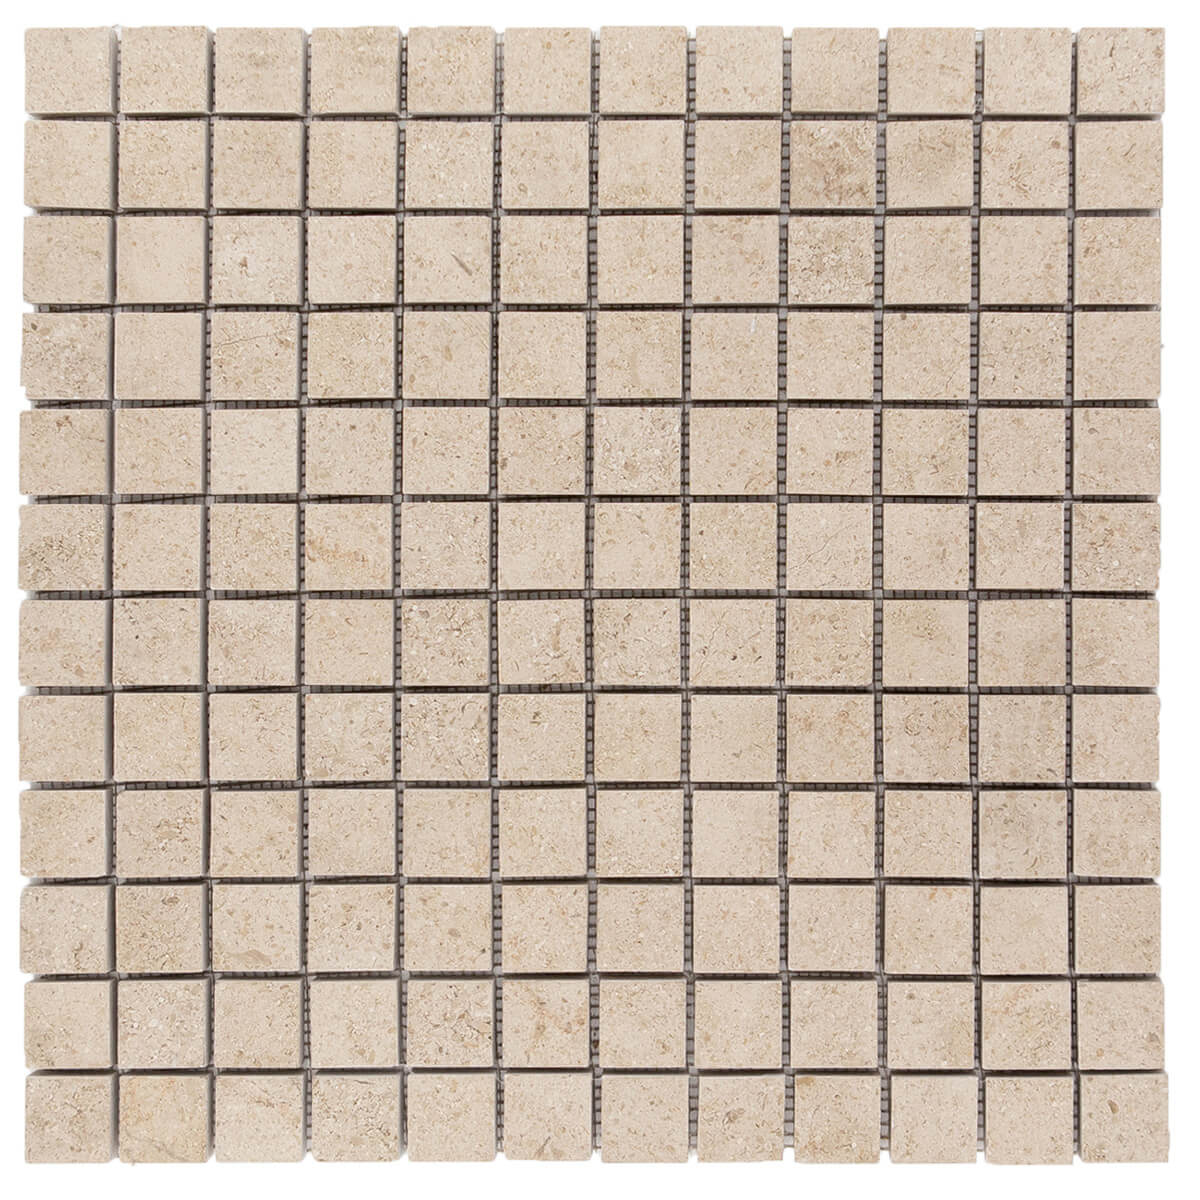 haussmann fonjone gascogne beige limestone square mosaic tile 1x1 honed